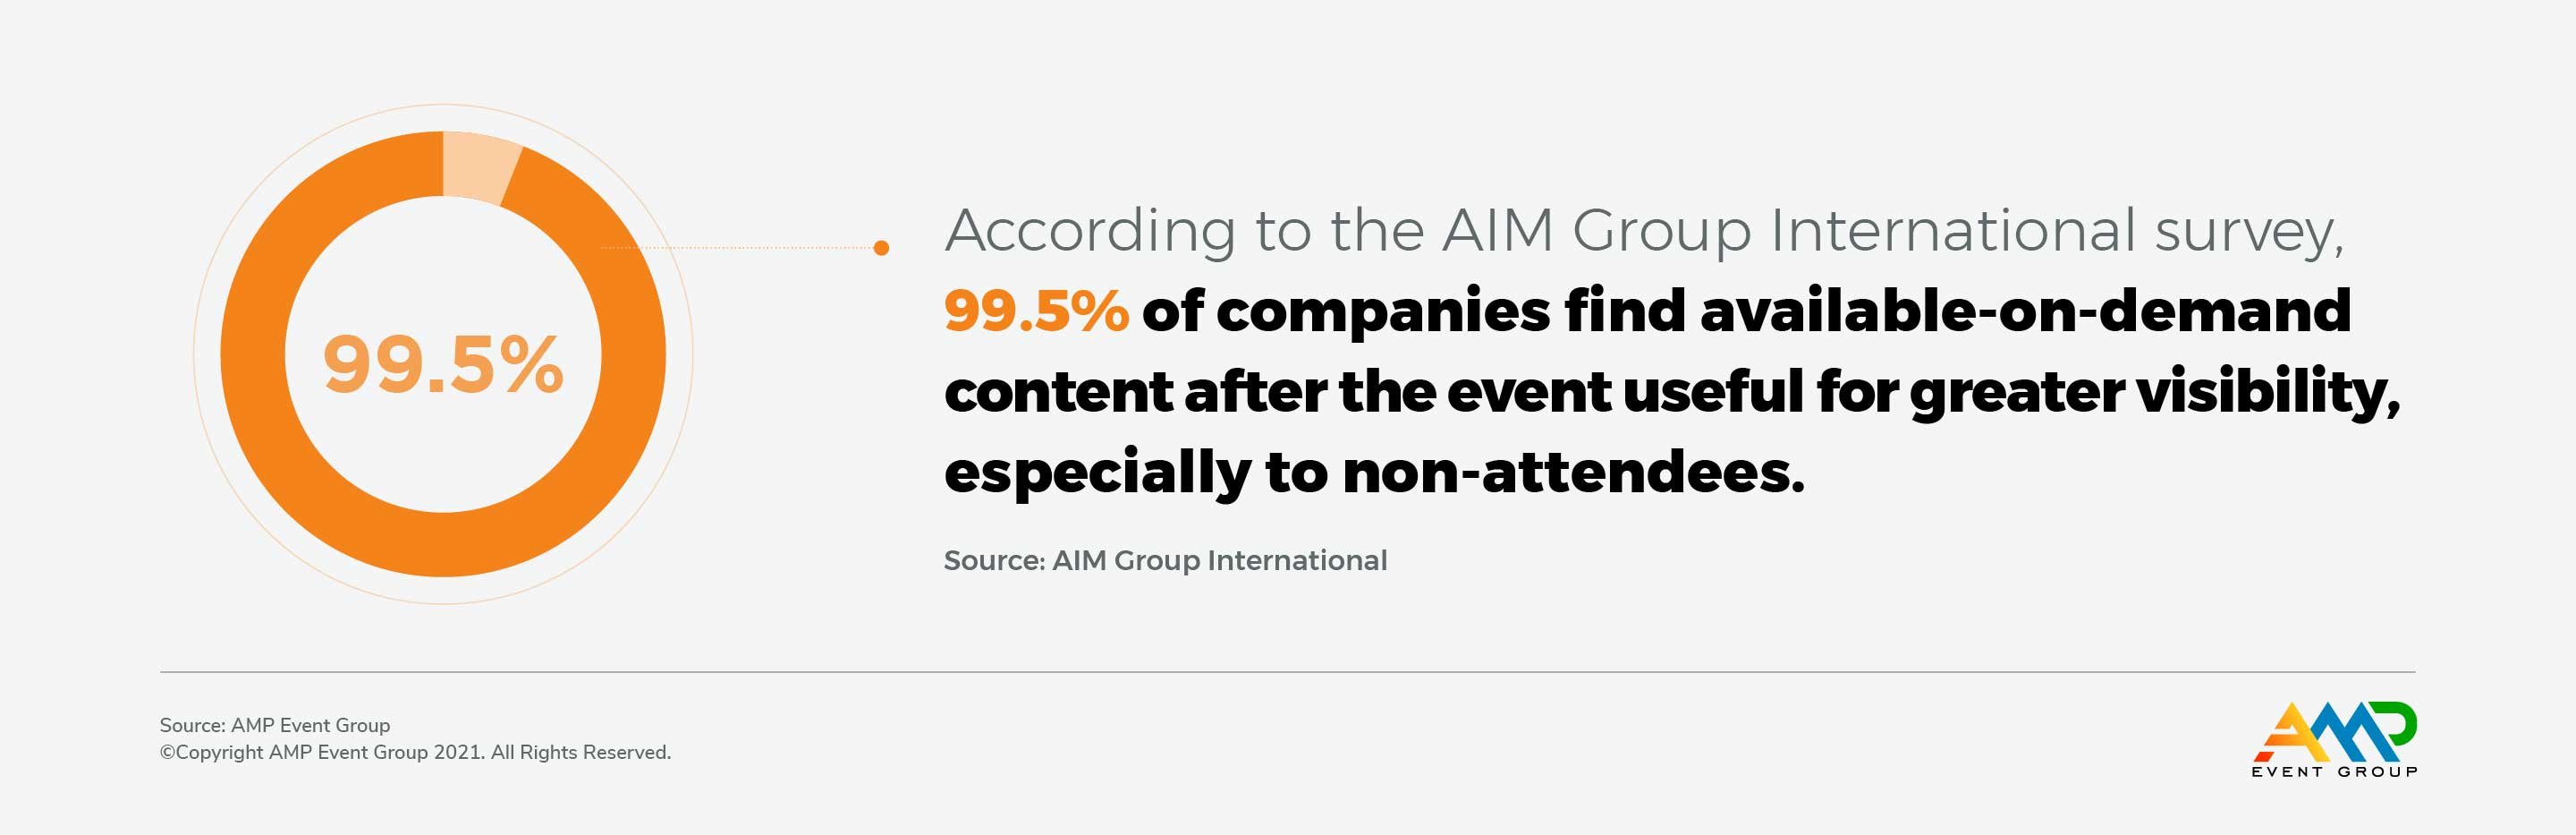 Amp Events: Hybrid Event Sponsorships - 99.5%